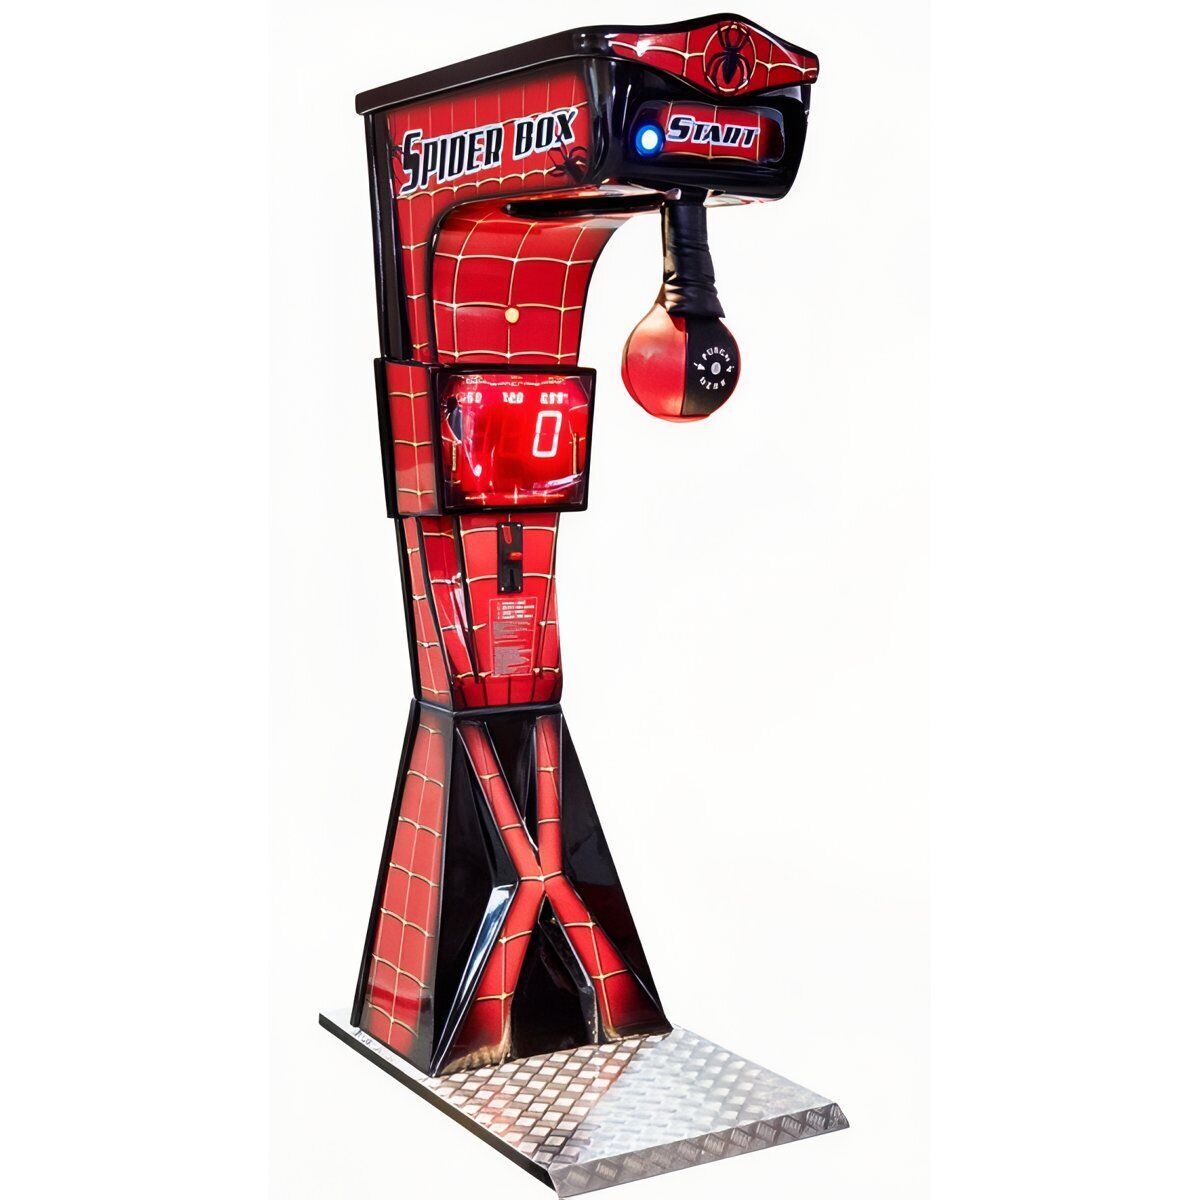 Kalkomat Boxer Boxing Machine Arcade Game - Spider Graphics